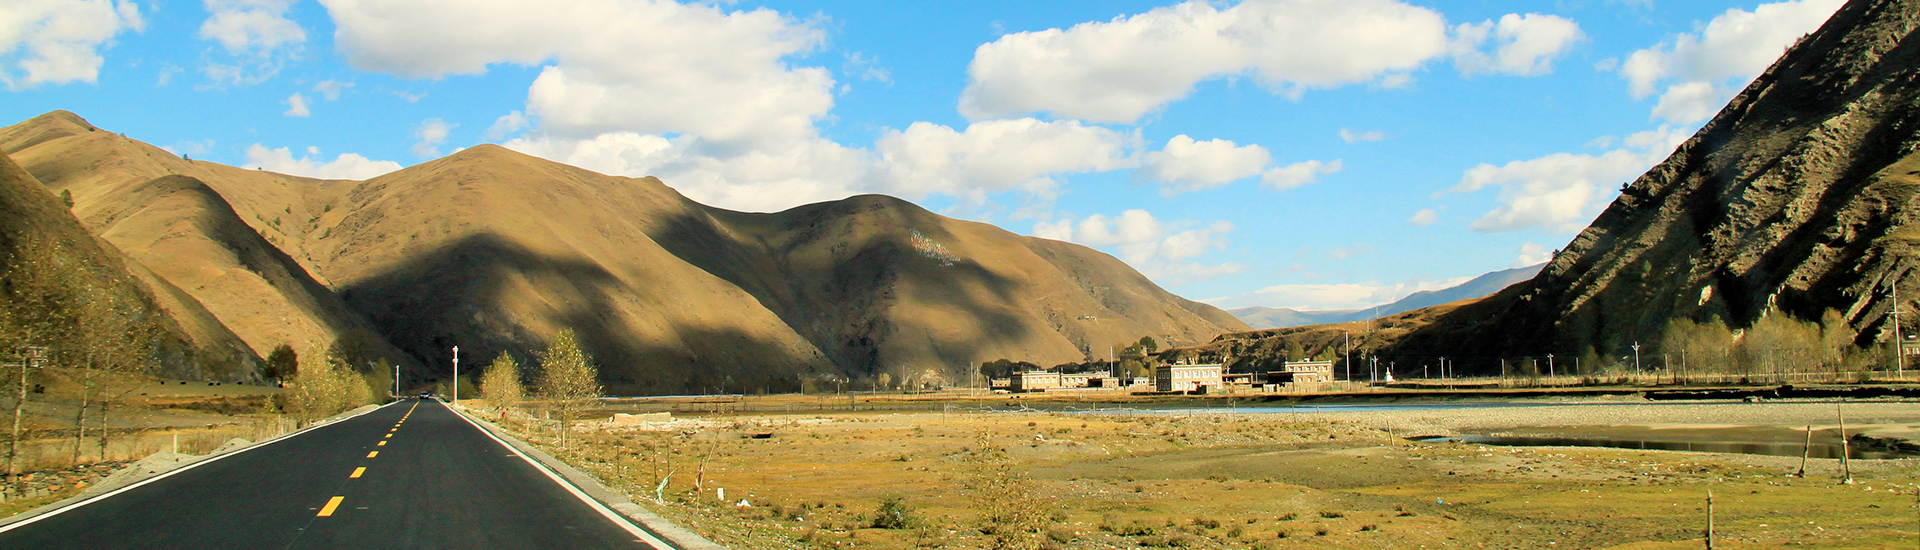 chengdu lhasa overland tour